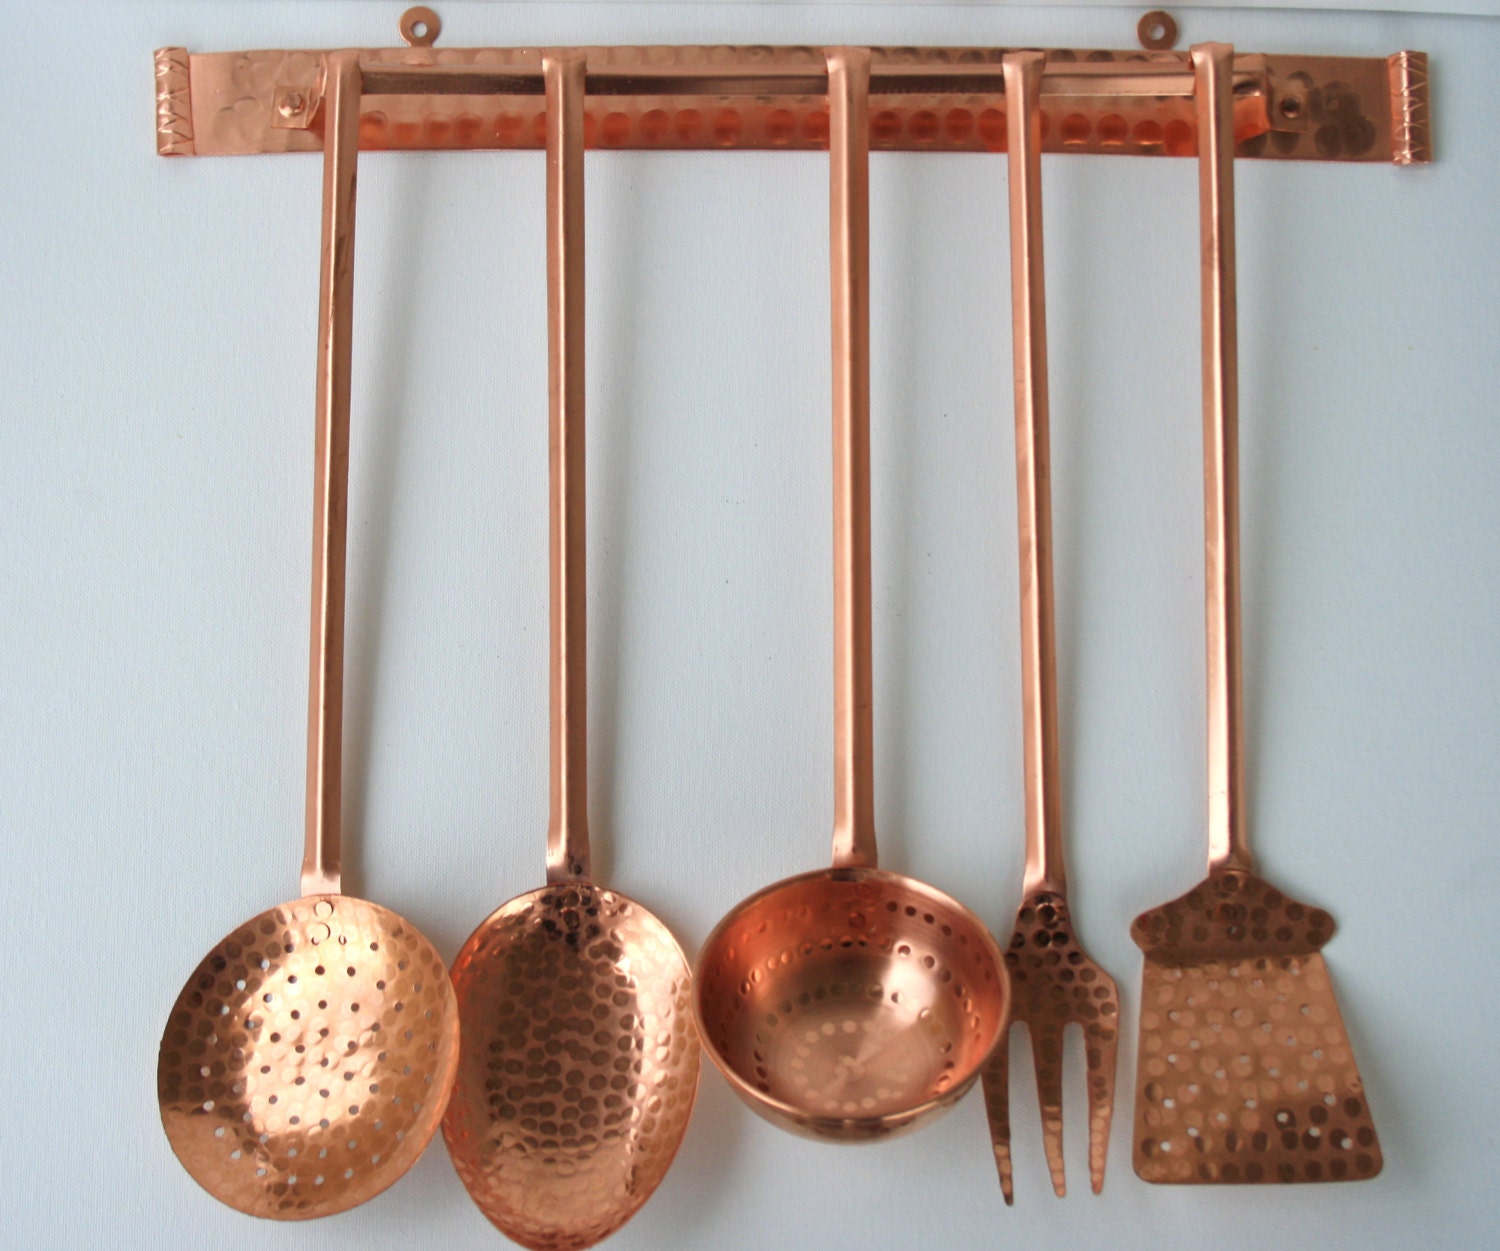 Copper Cooking Utensils